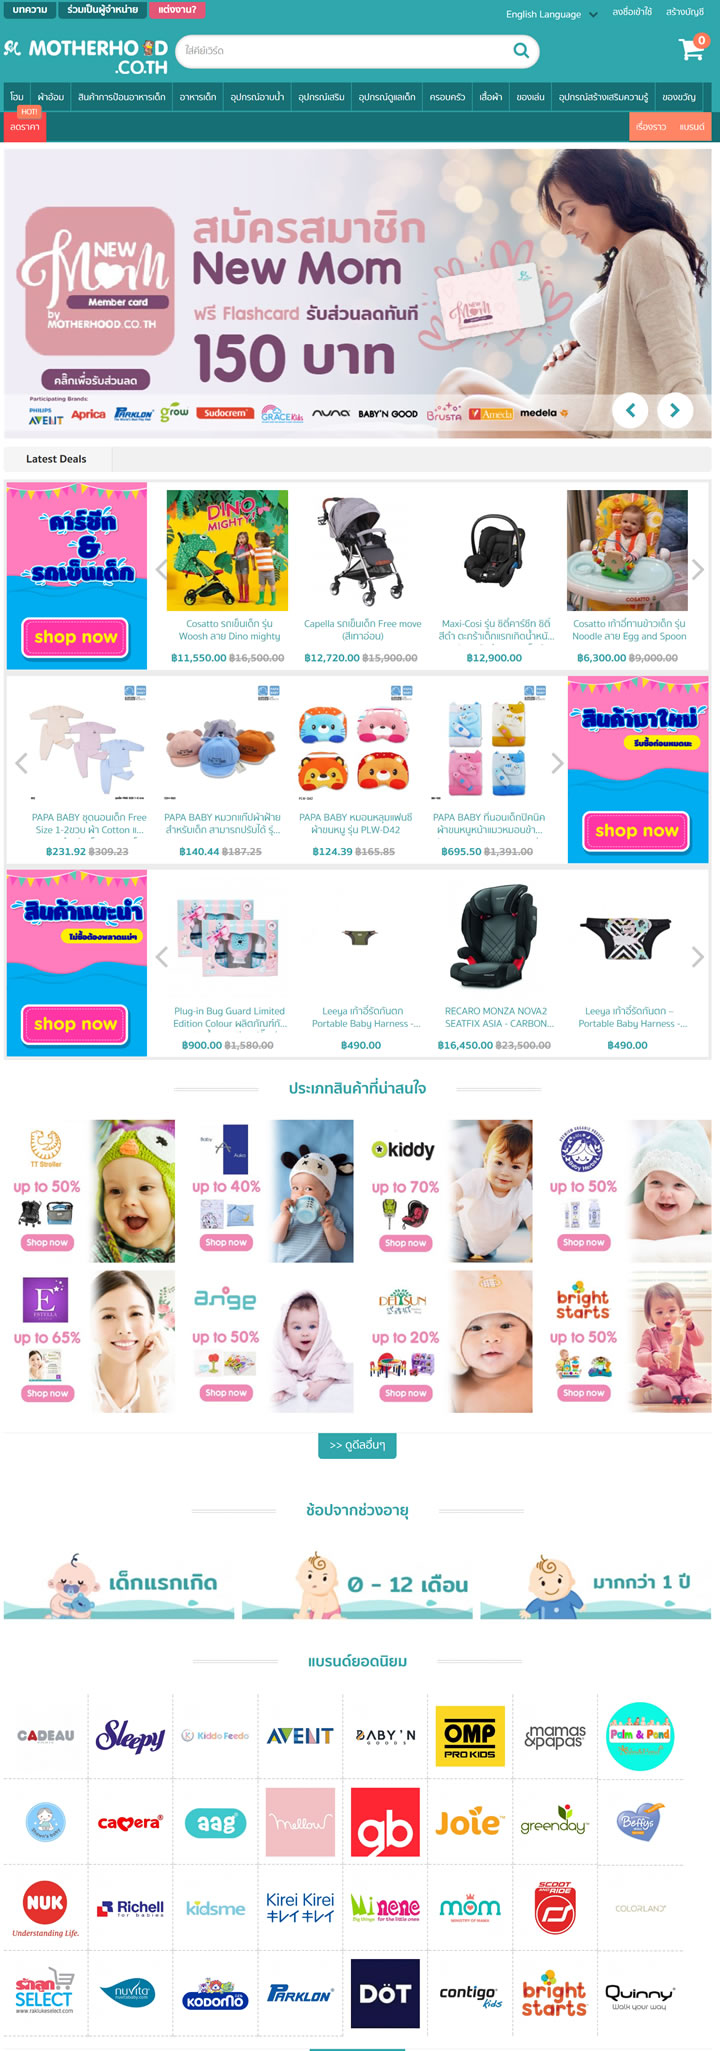 Motherhood泰国网上婴儿用品店